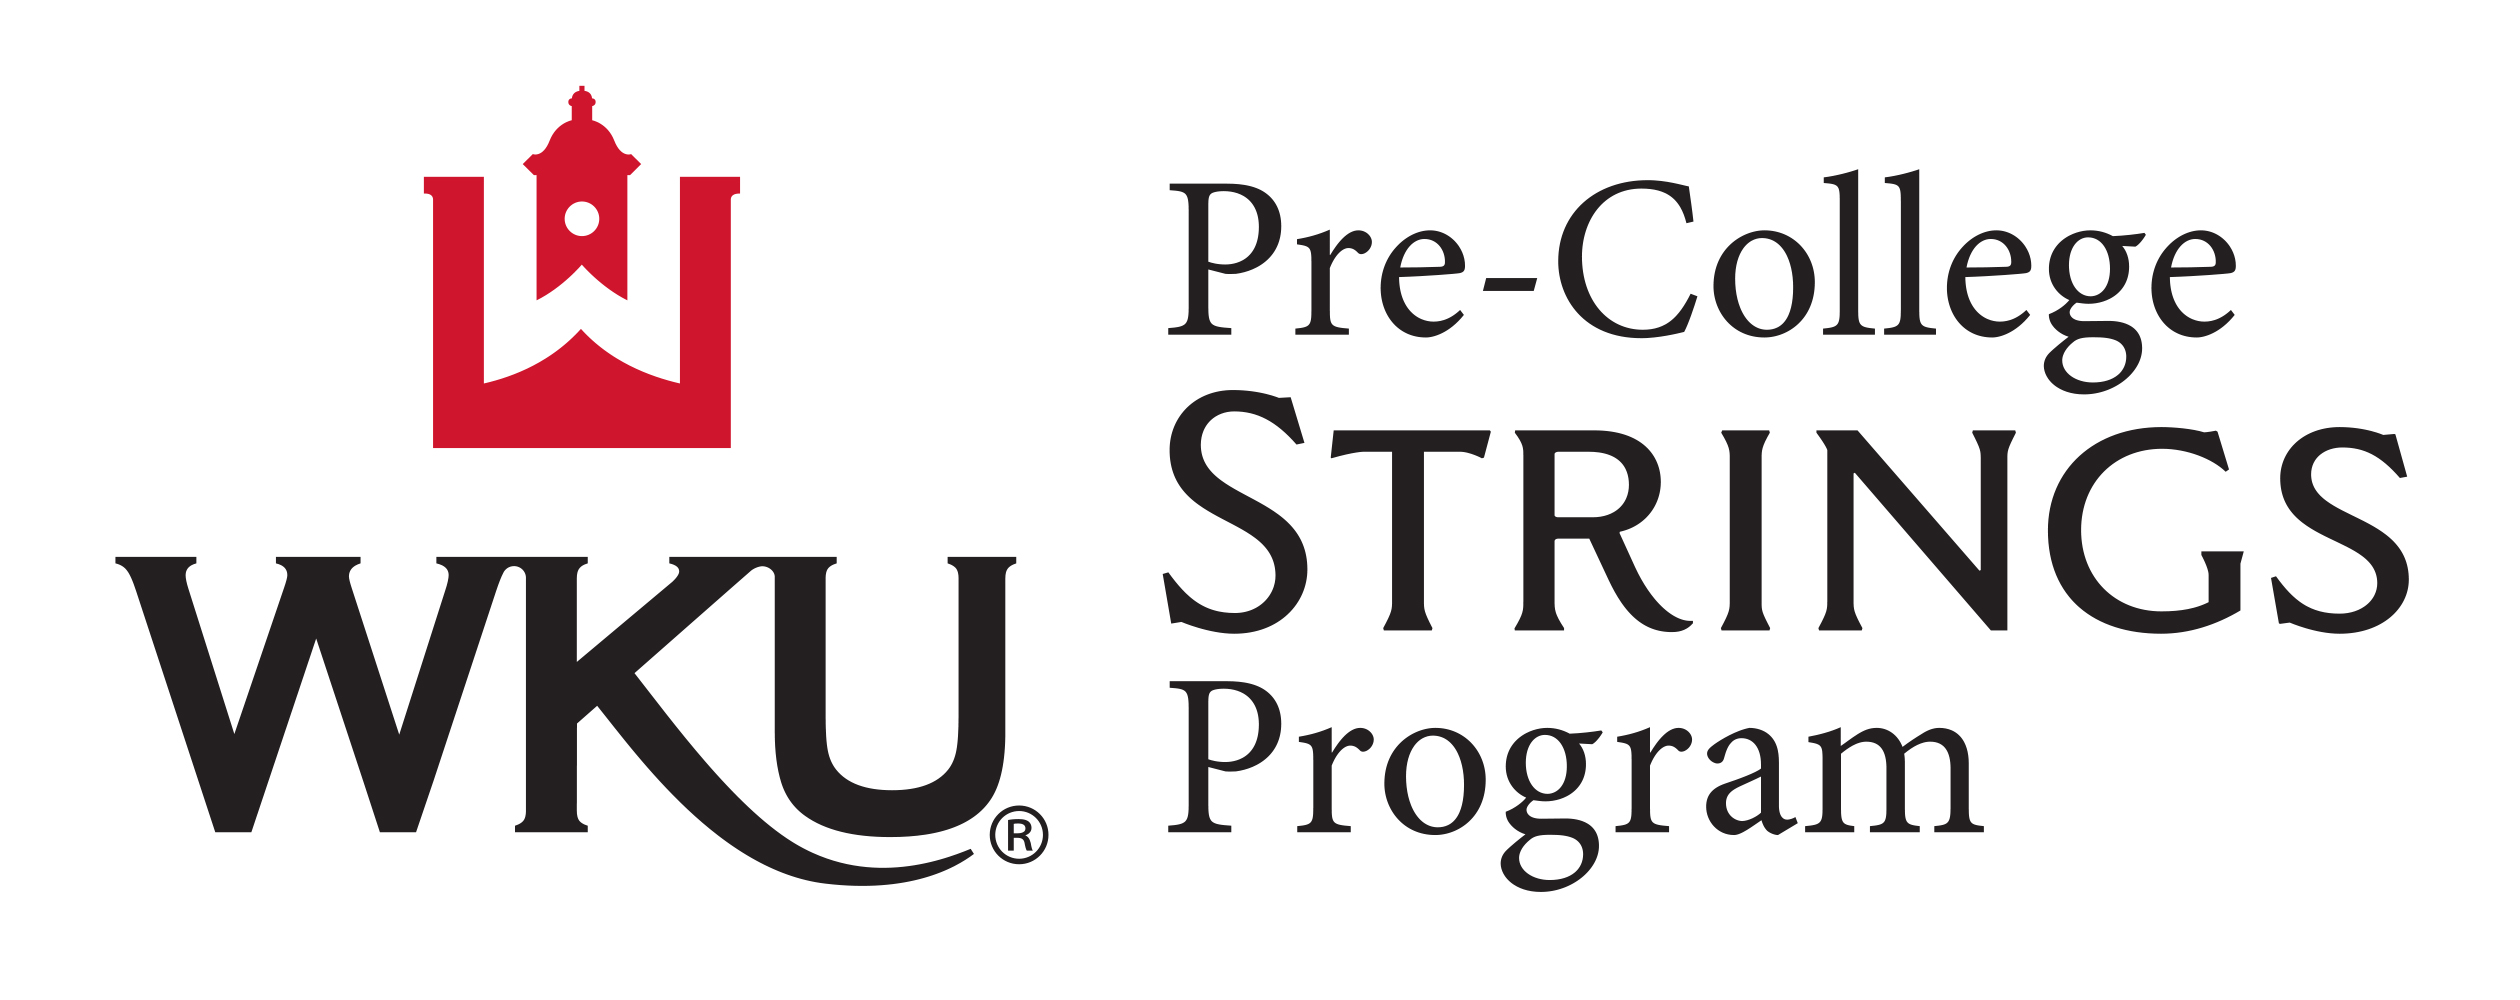 Pre-College Strings Program